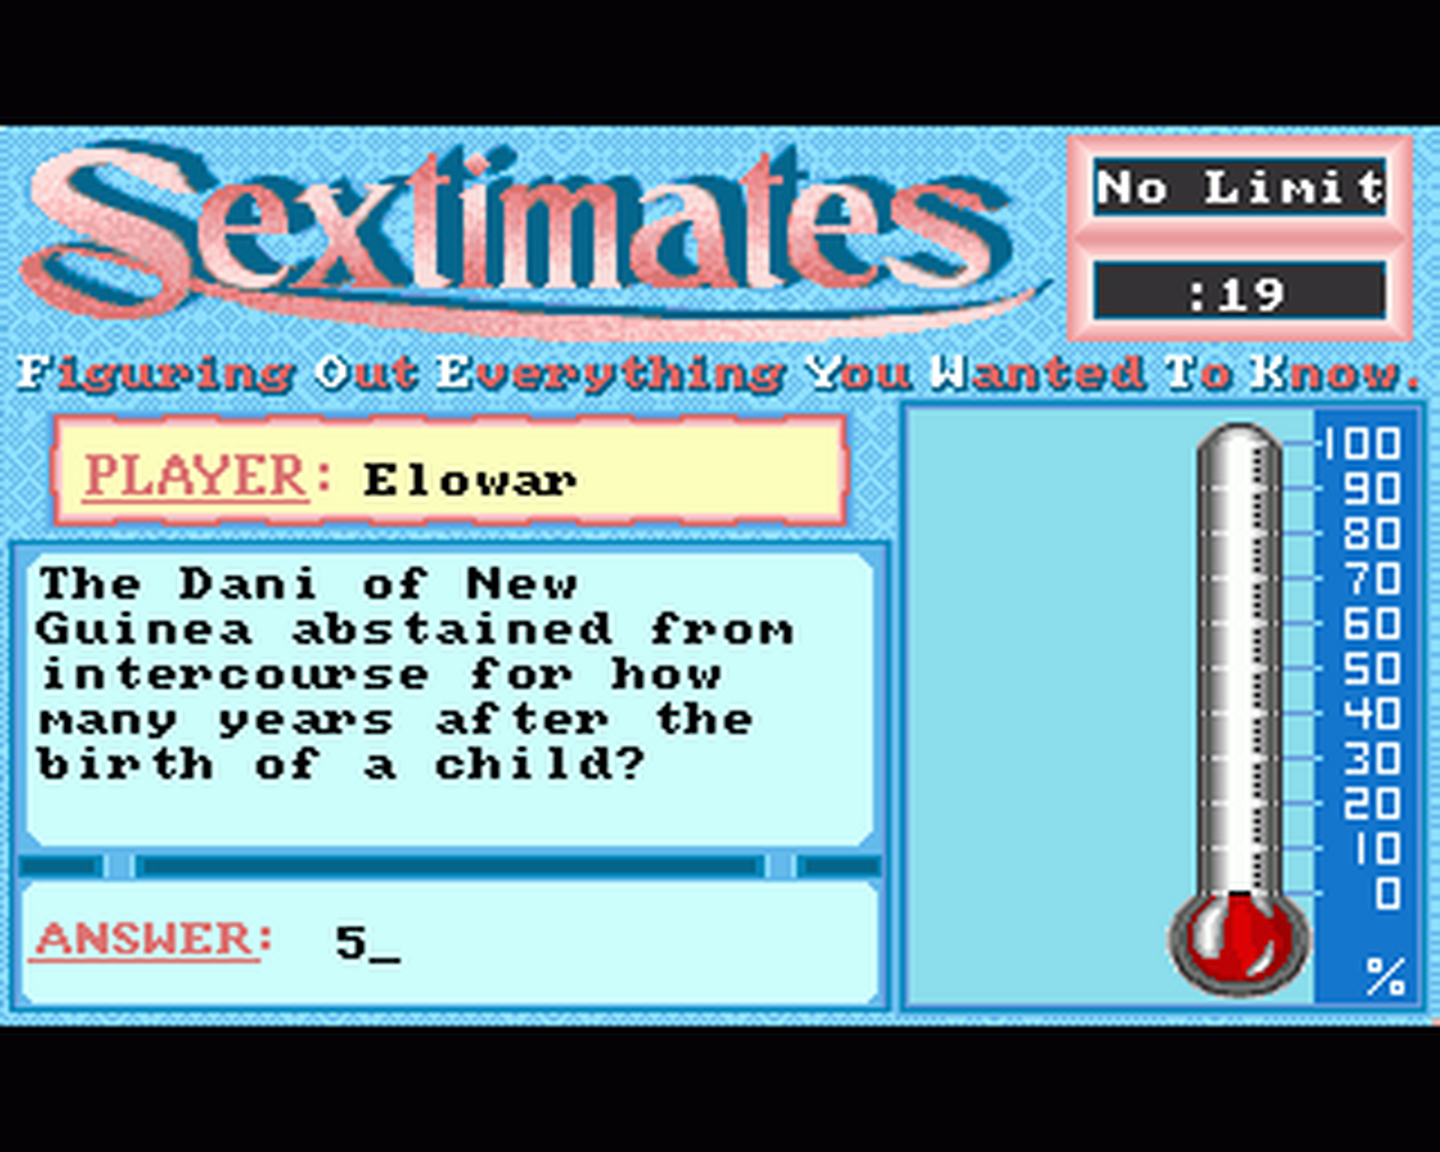 Amiga GameBase Sextimates Actionworks 1990